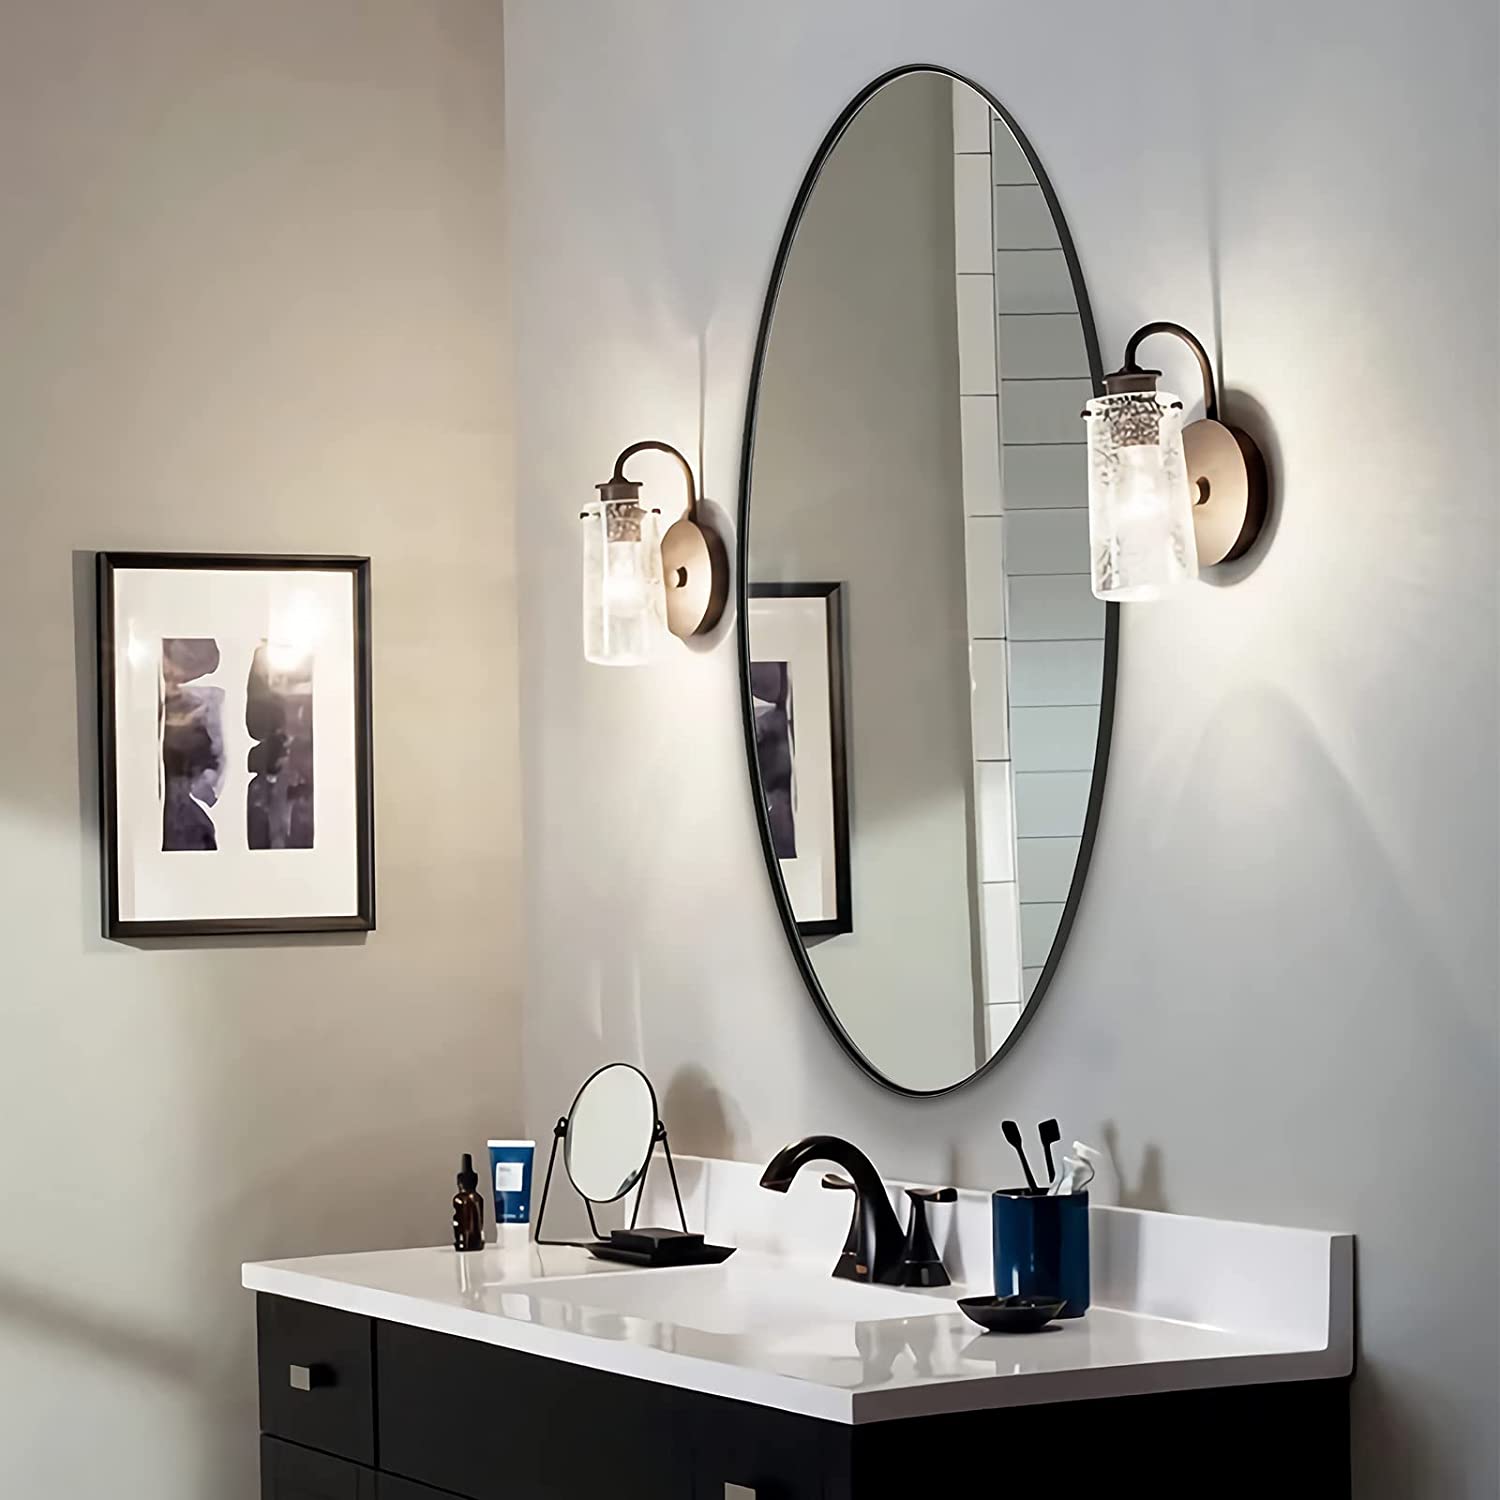 Modern Bathroom Oval Vanity Mirrors |Stainless Steel Frame Mounted Horizontal or Vertical